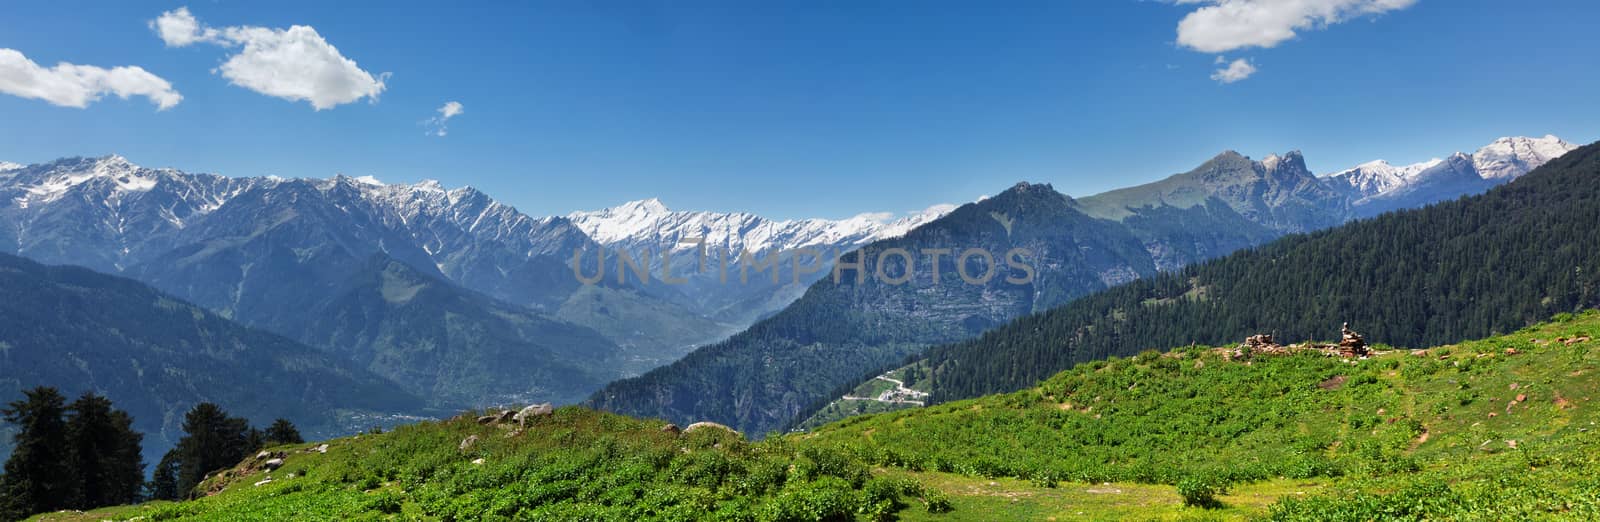 Panorama of Himalayas, India by dimol